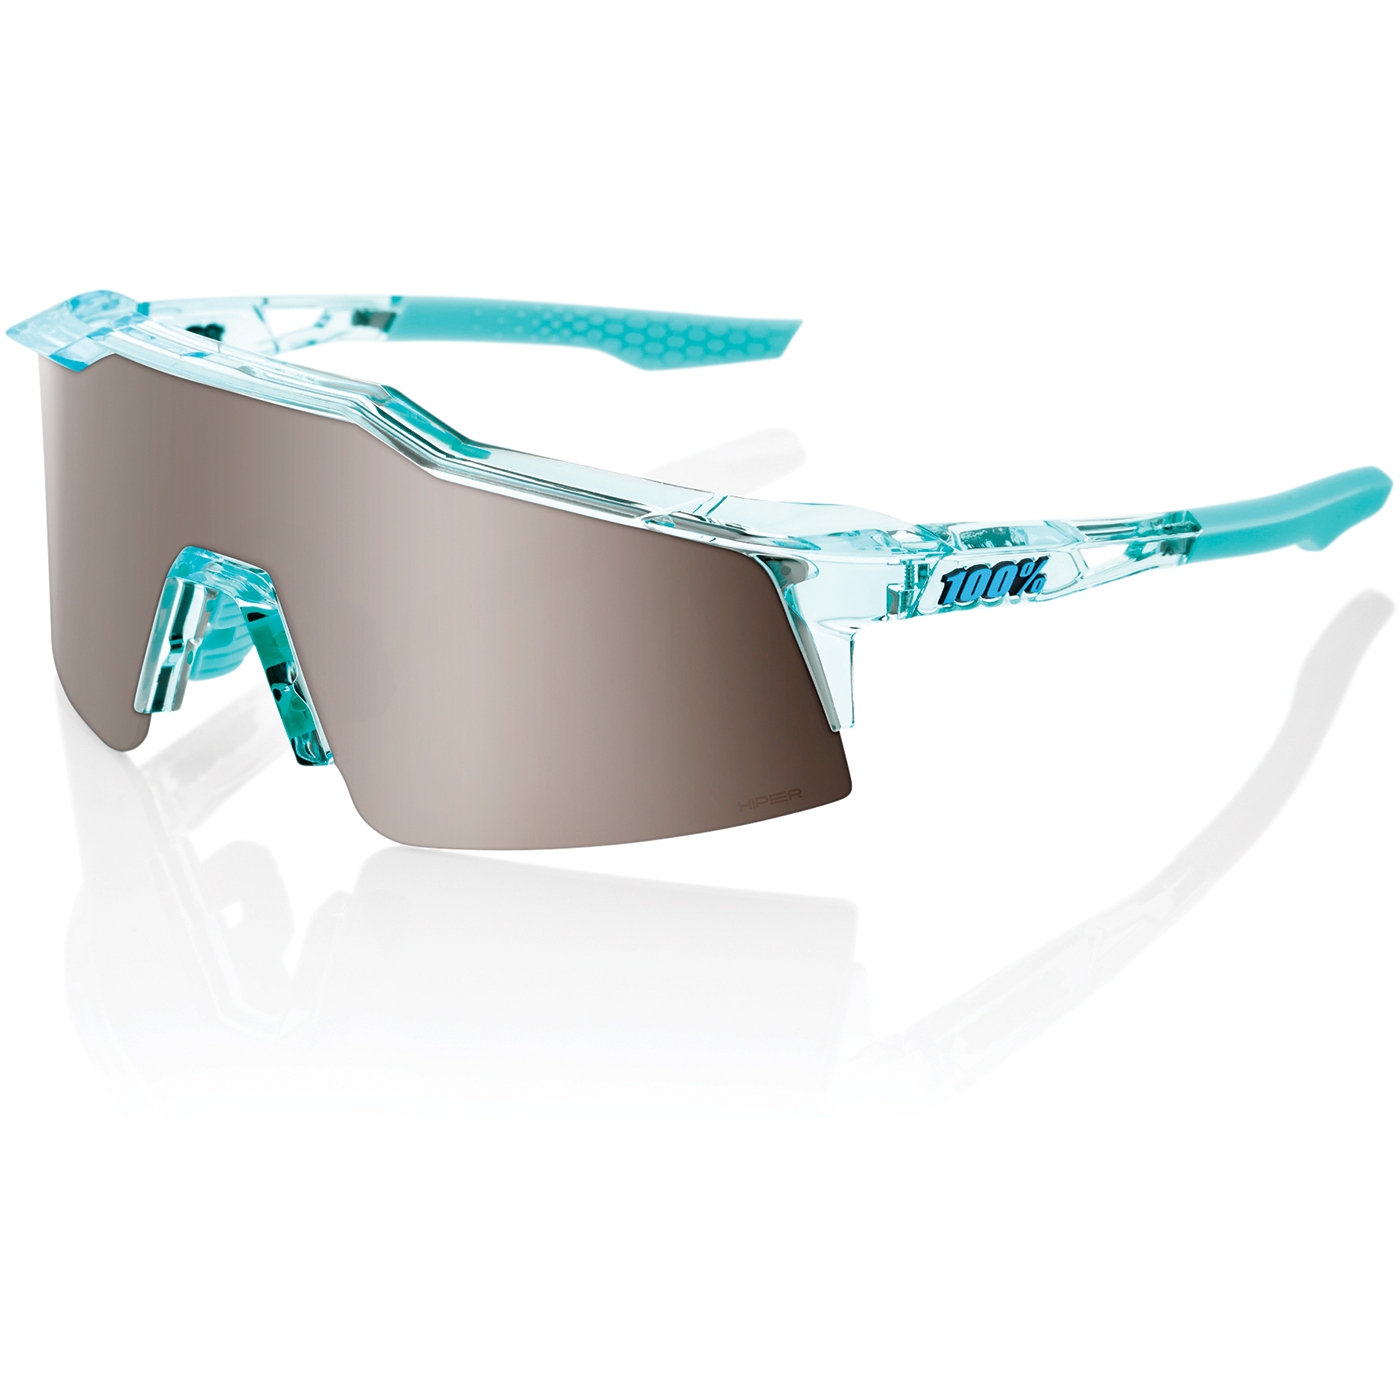 Picture of 100% Speedcraft SL Glasses - HiPER Mirror Lens - Polished Translucent Mint / Silver